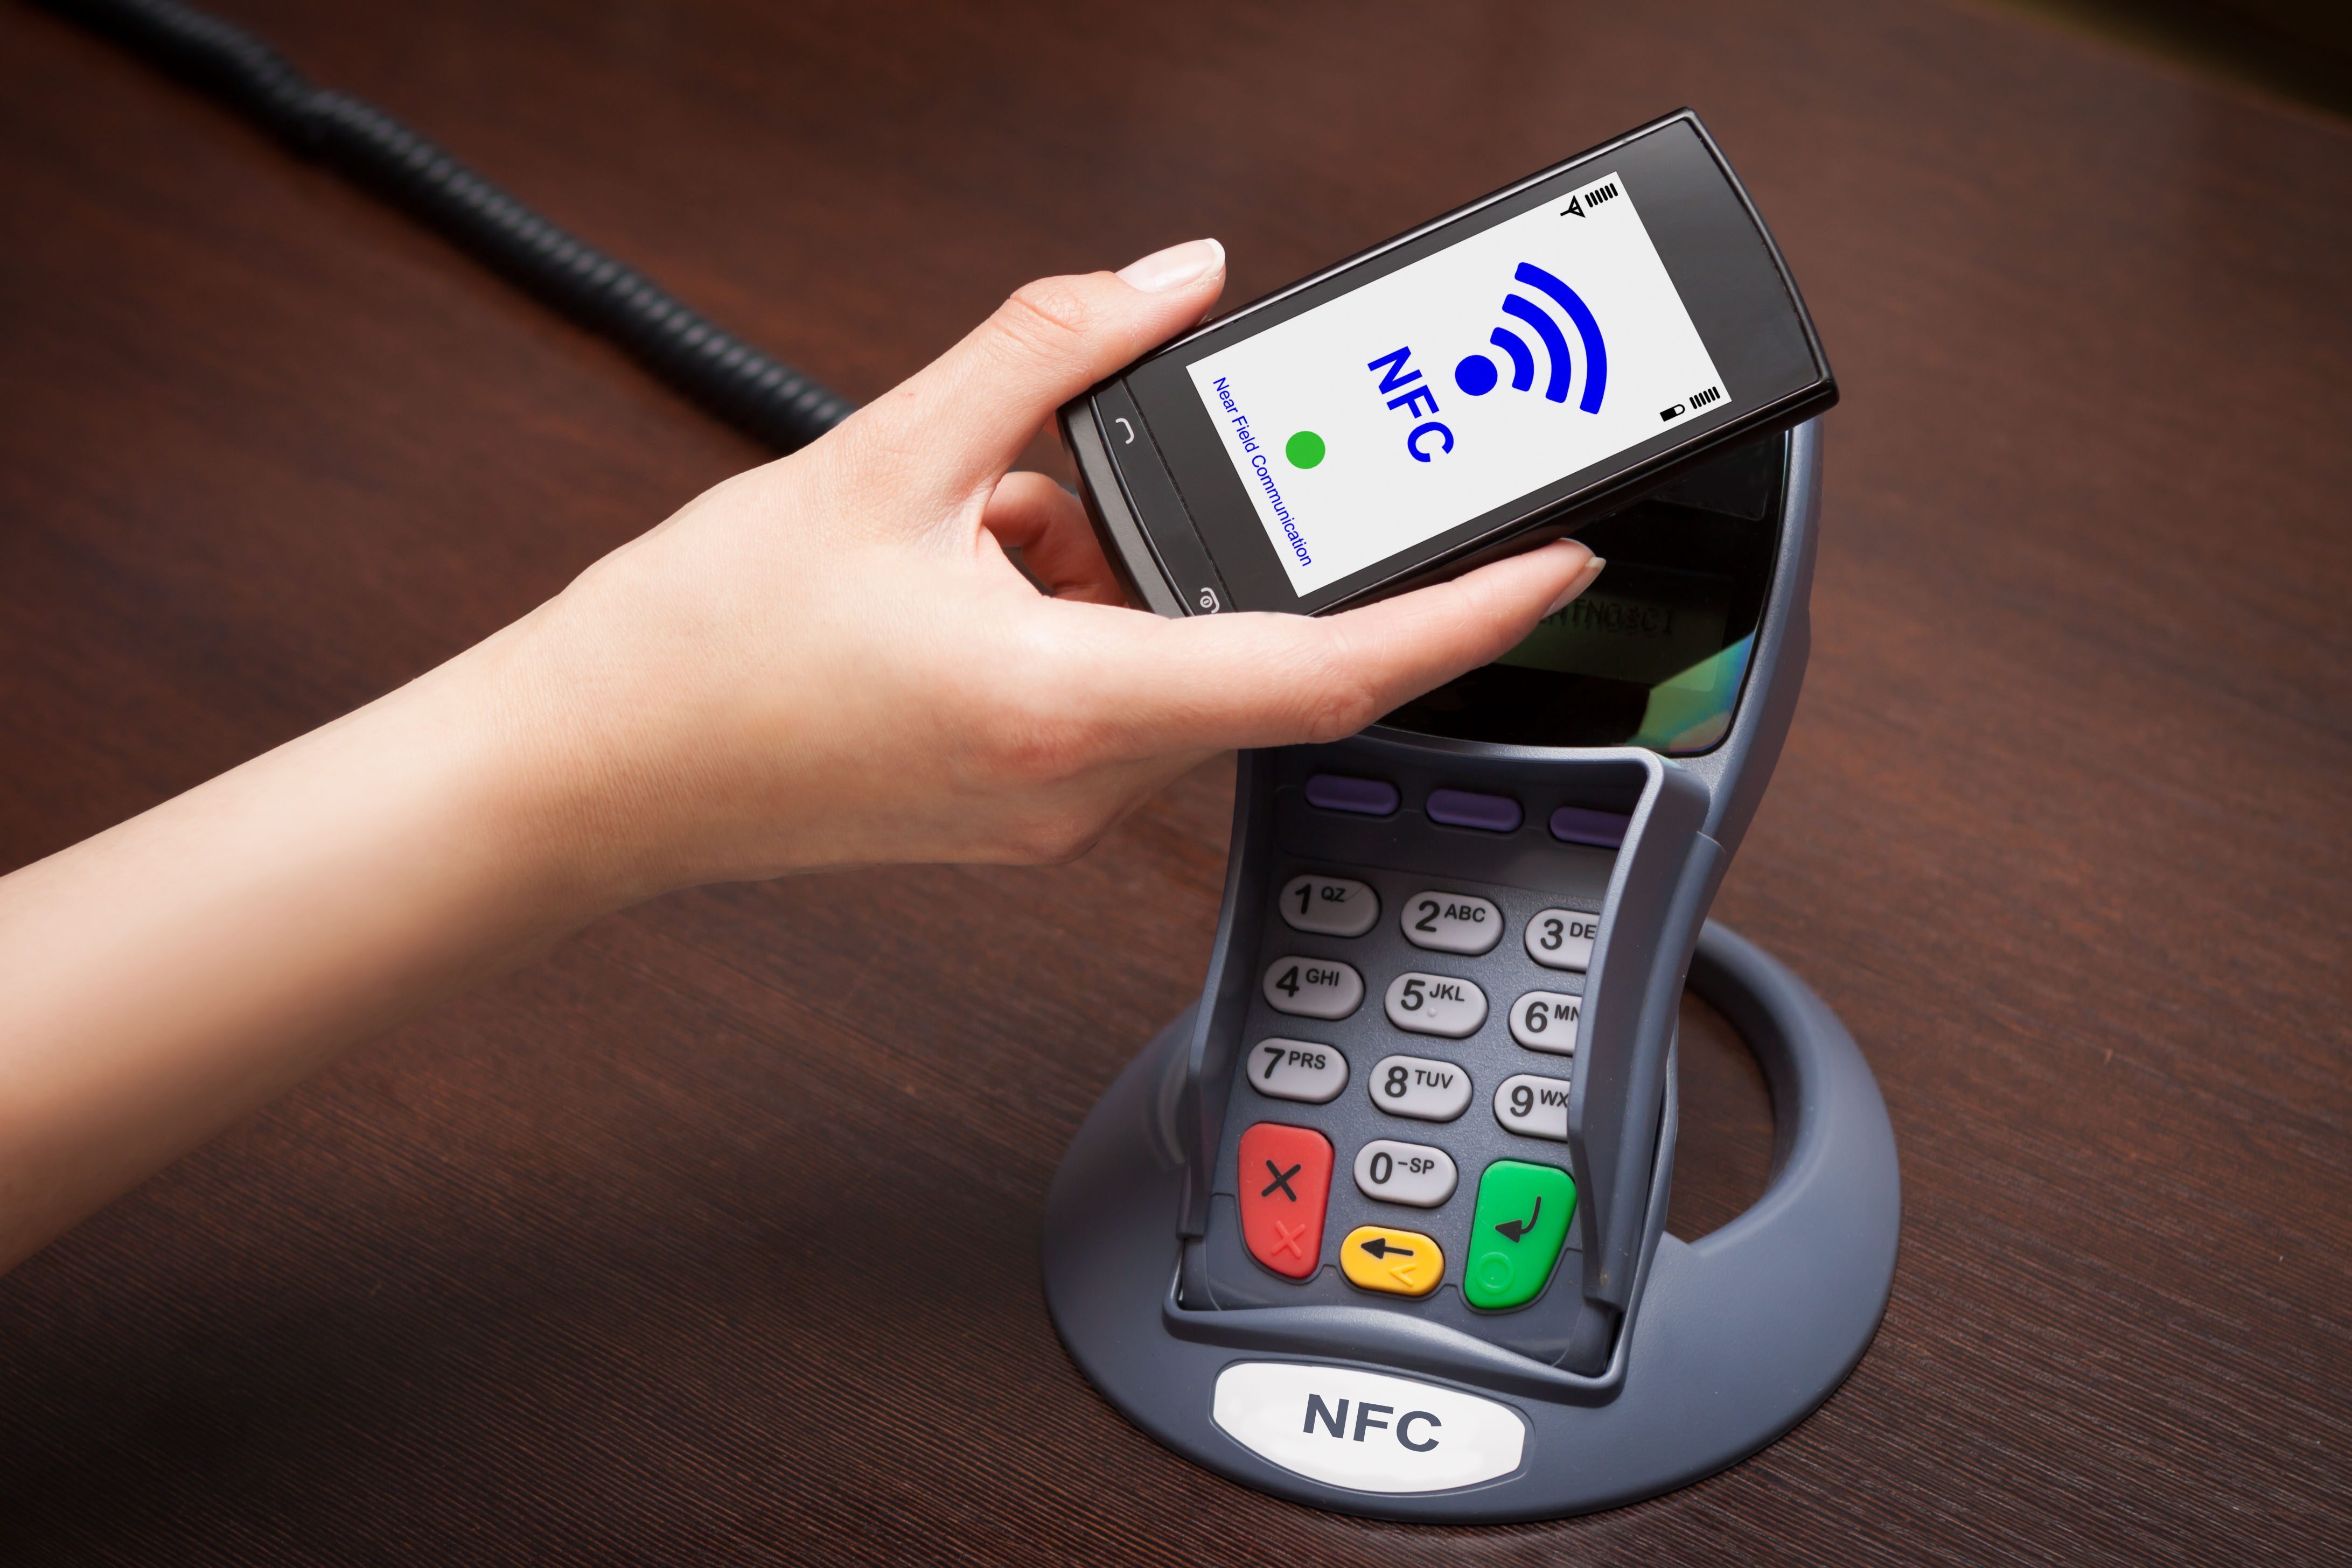 Pay оплата с телефона. Near field communication (NFC). Что такое NFC В смартфоне. Бесконтактная оплата NFC. NFC технология.